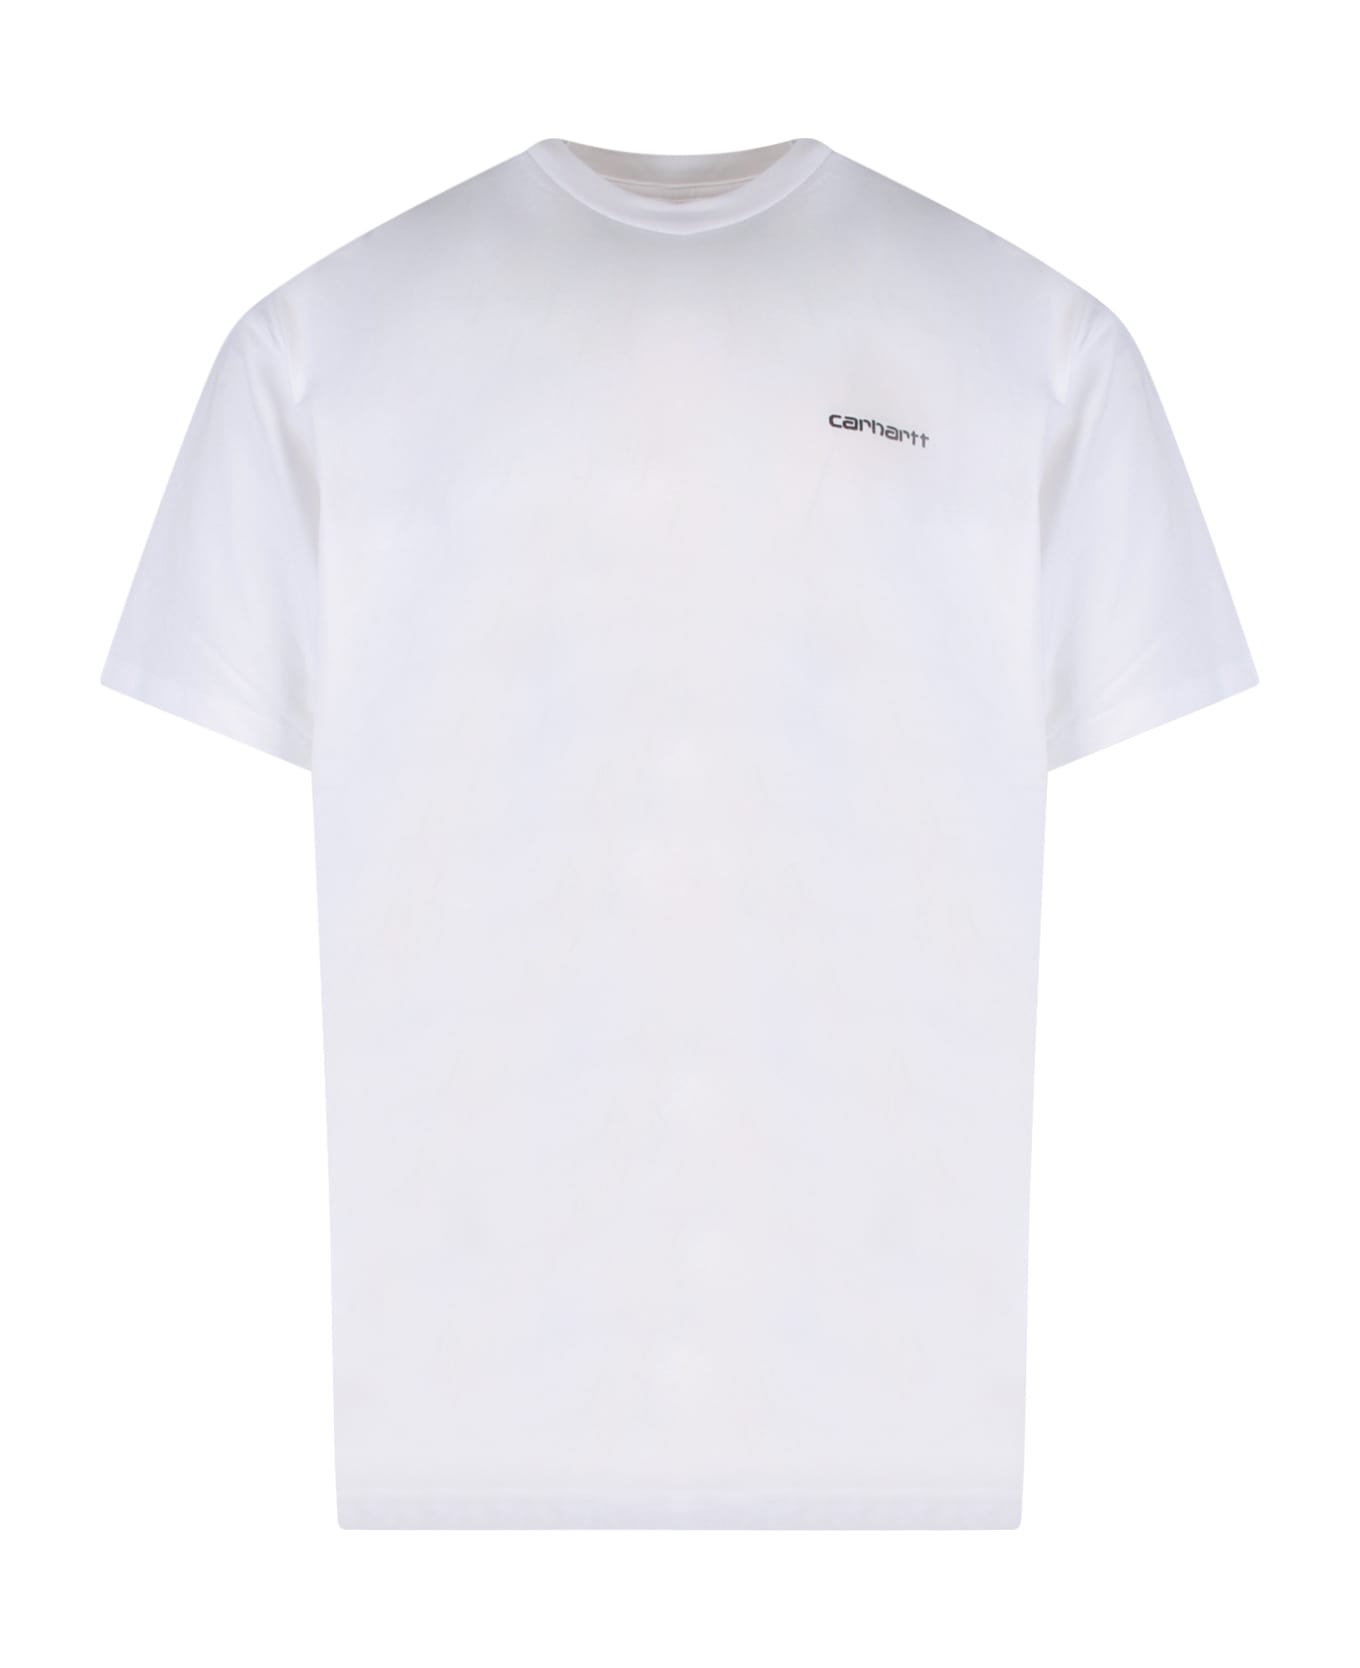 Carhartt Script Embroidery T-shirt - White